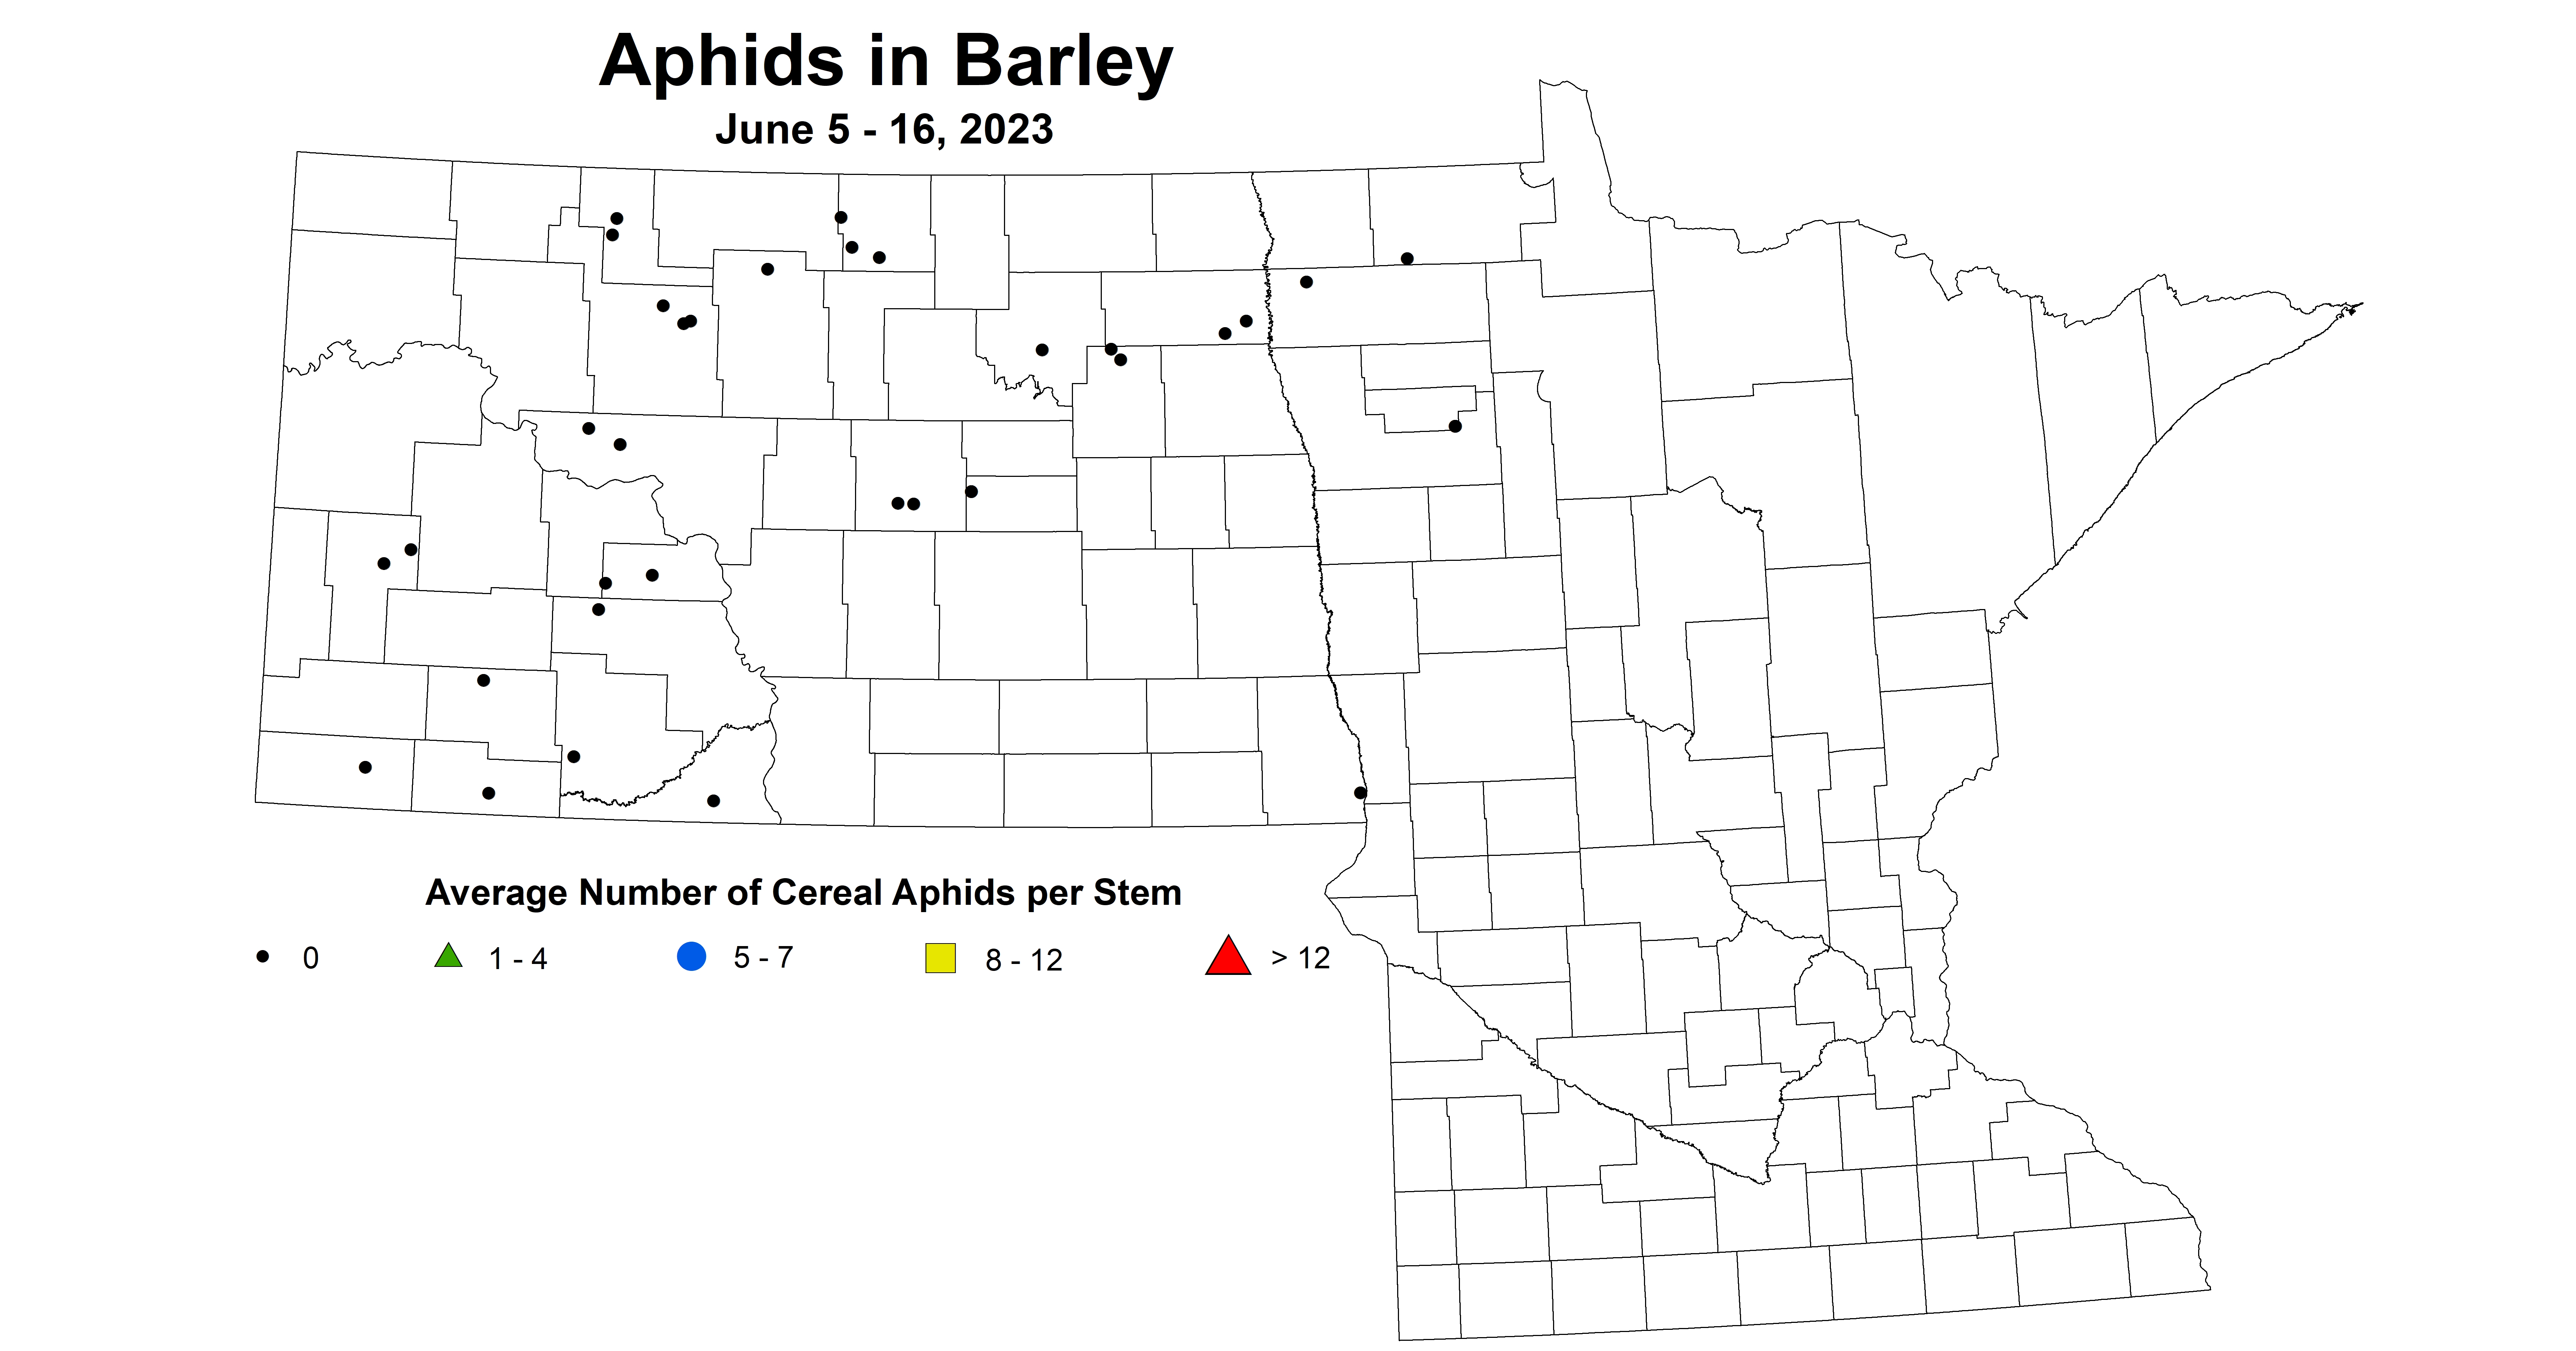 barley aphids June 5-16 2023